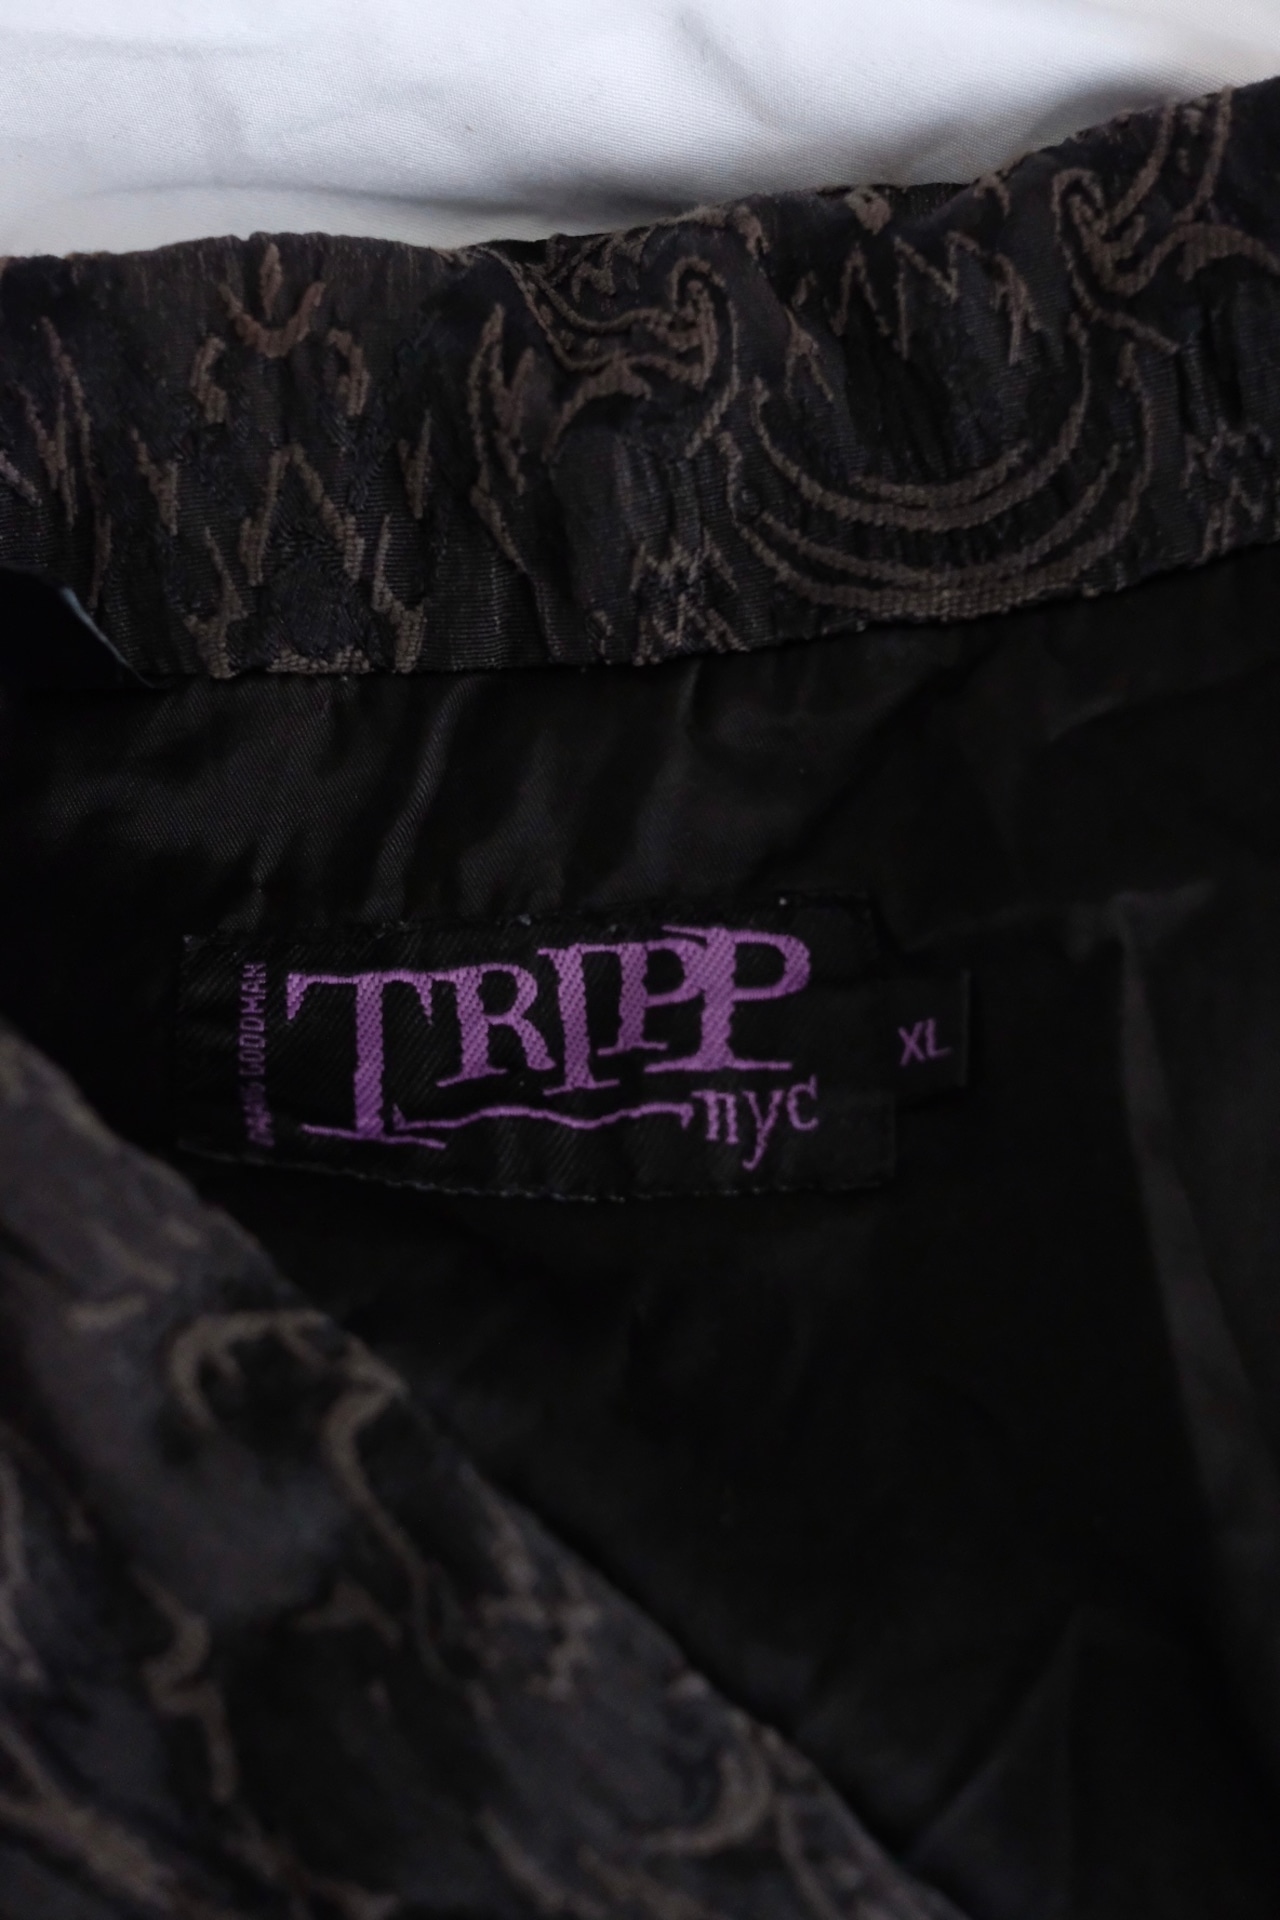 “TRIPP NYC“ Lace up jacket